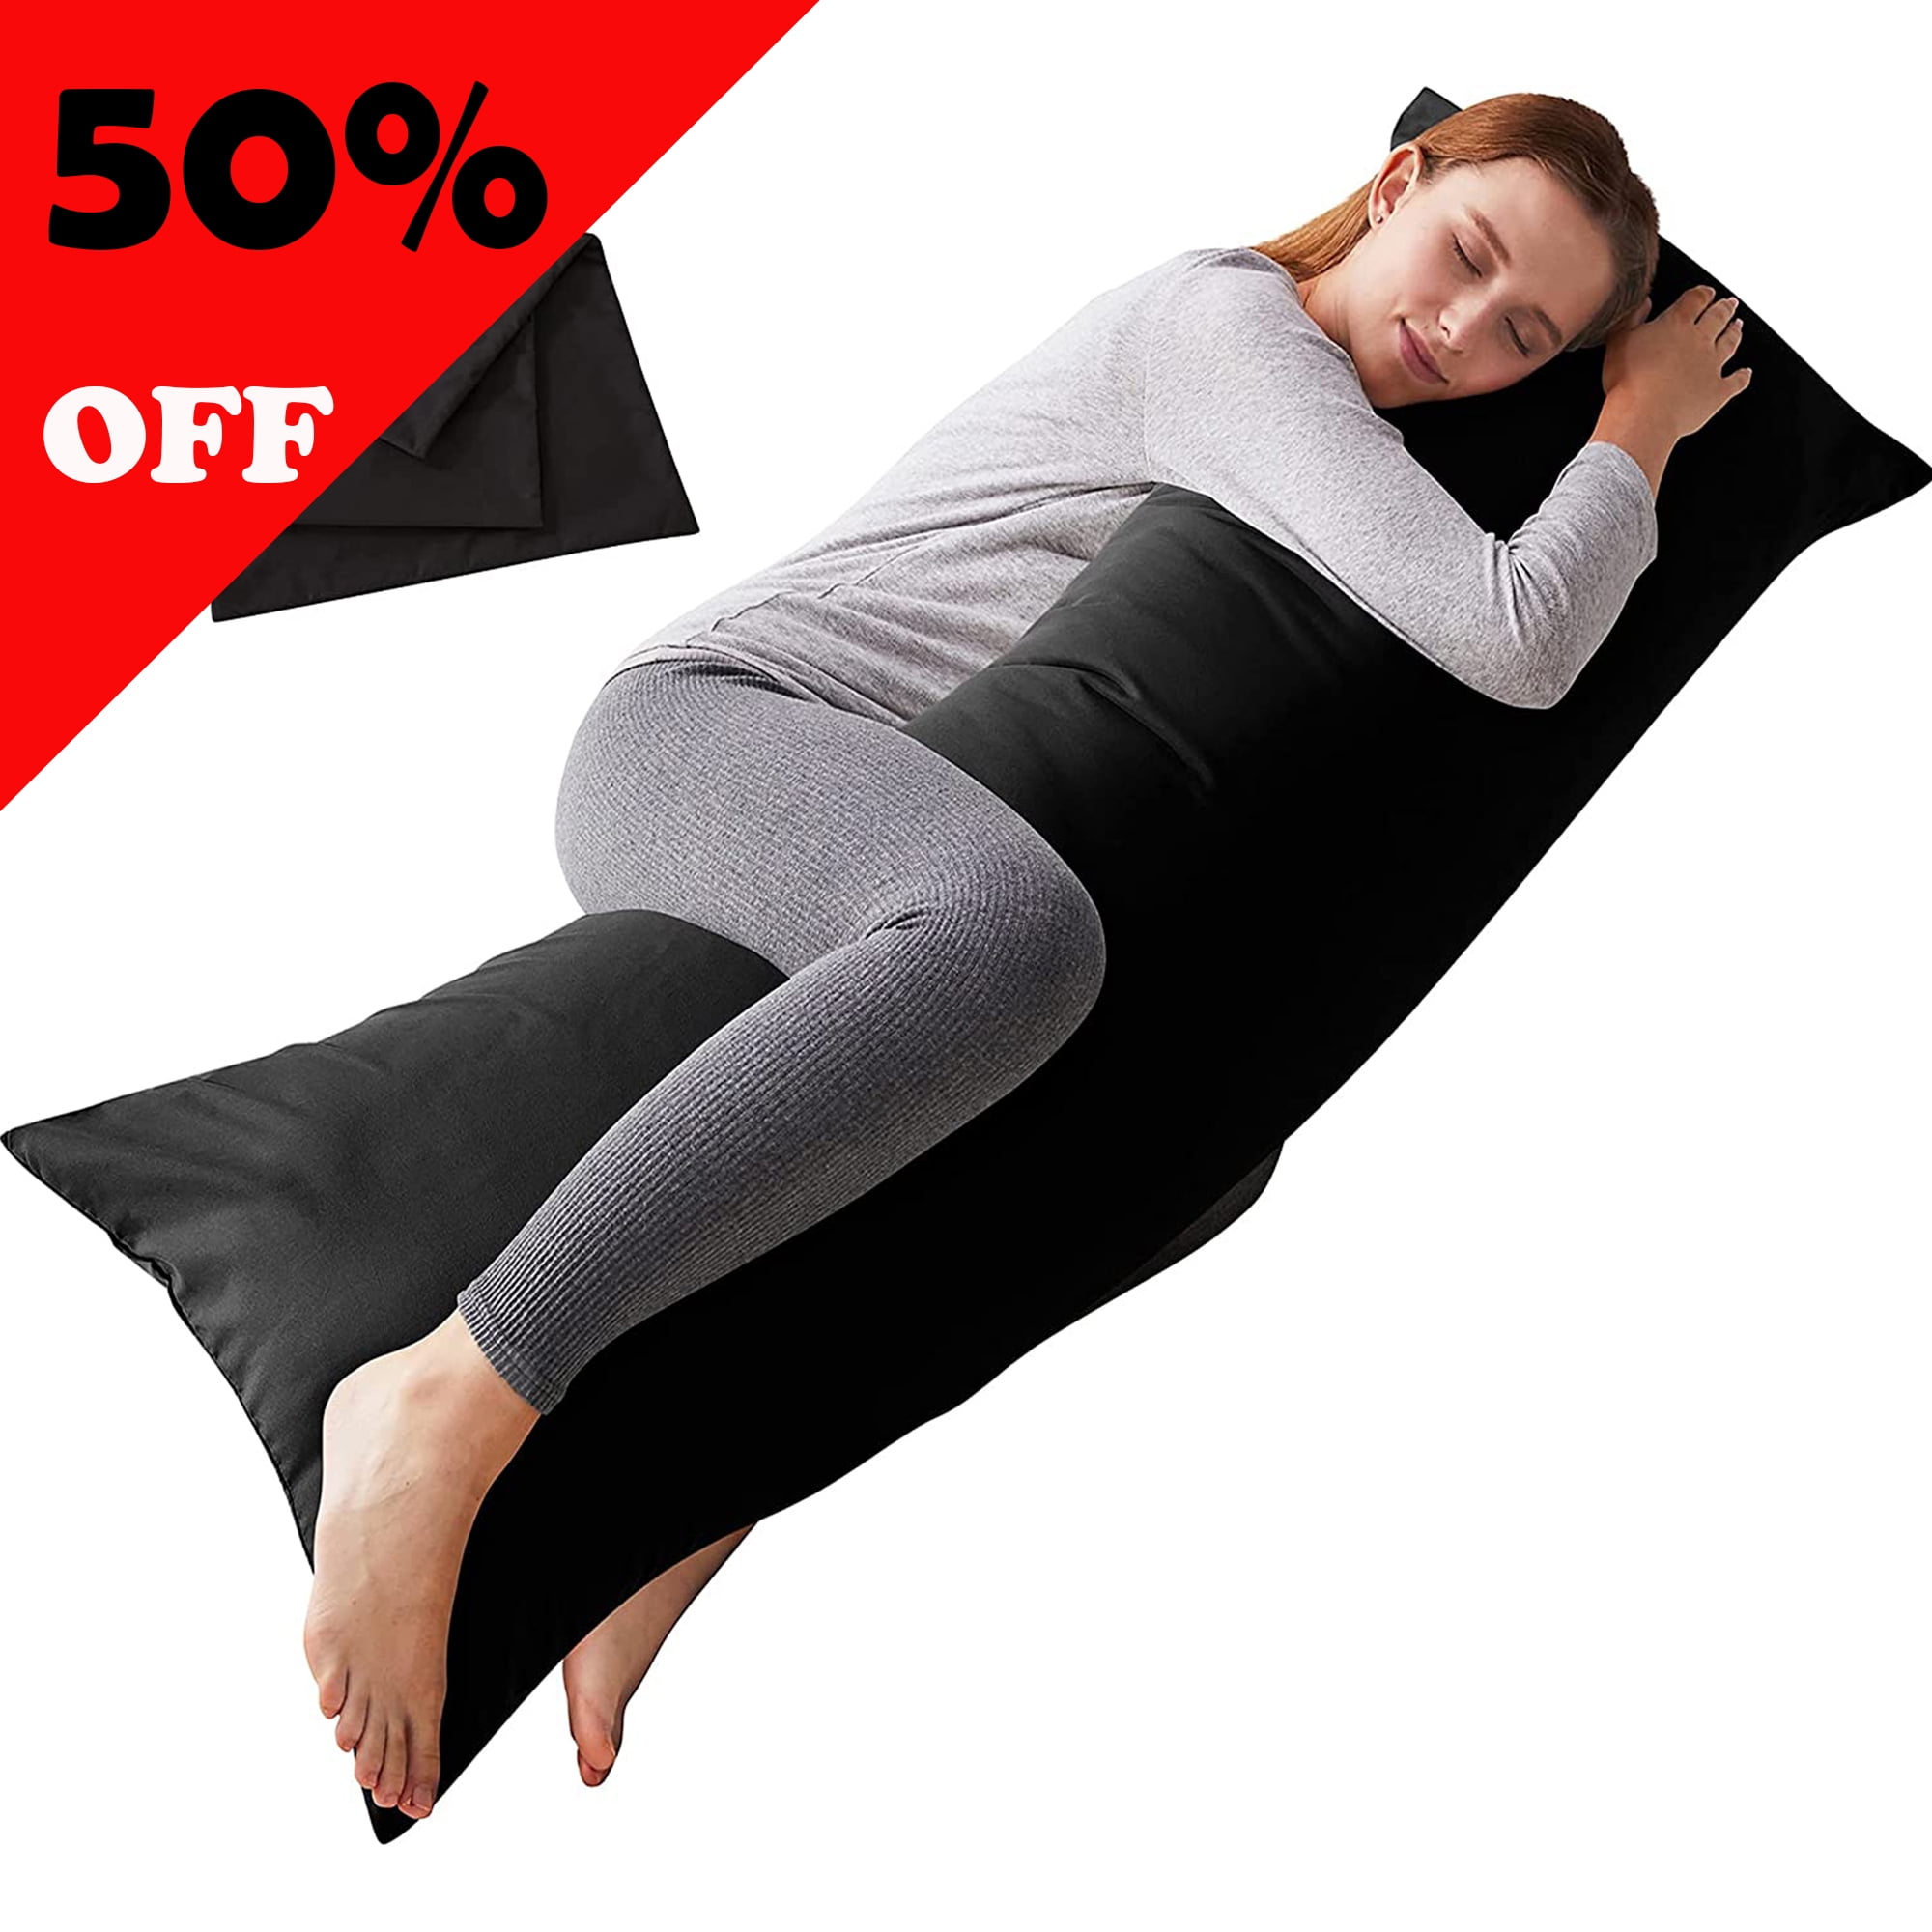 Extra Filled Long Bolster Pillow Pregnancy Nursing Support Body